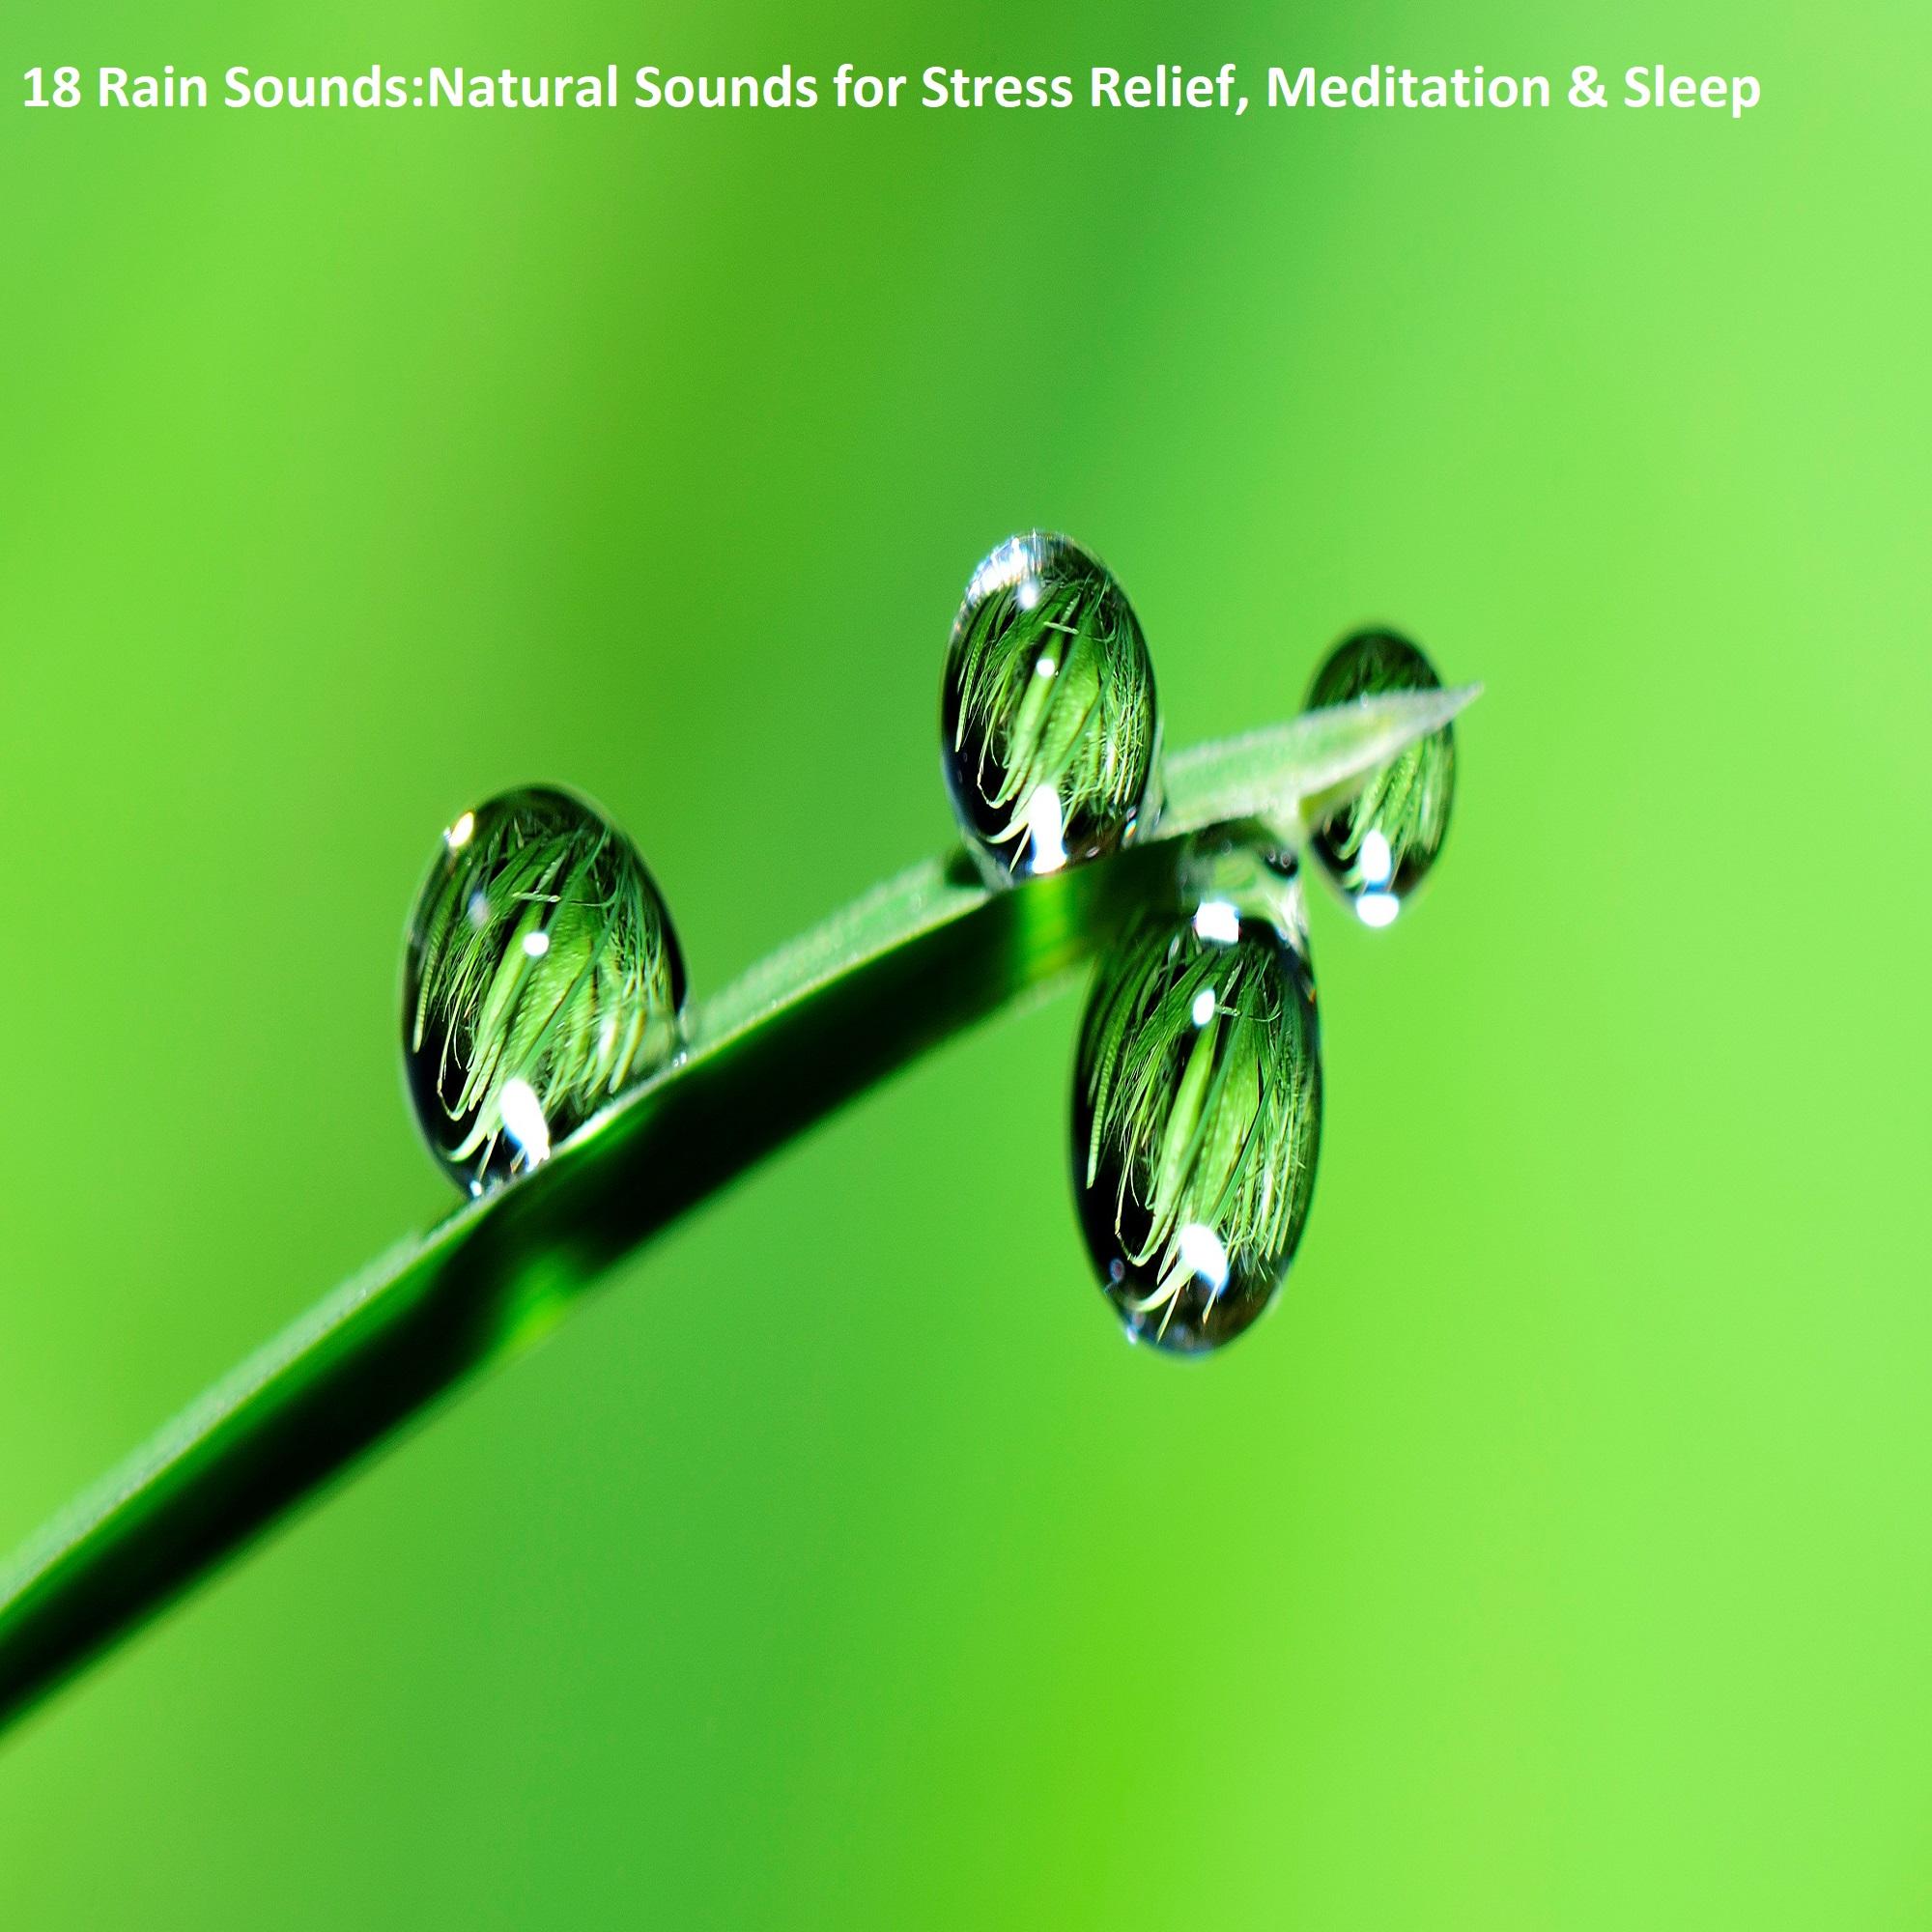 18 Rain Sounds: Natural Sounds for Stress Relief, Meditation & Sleep